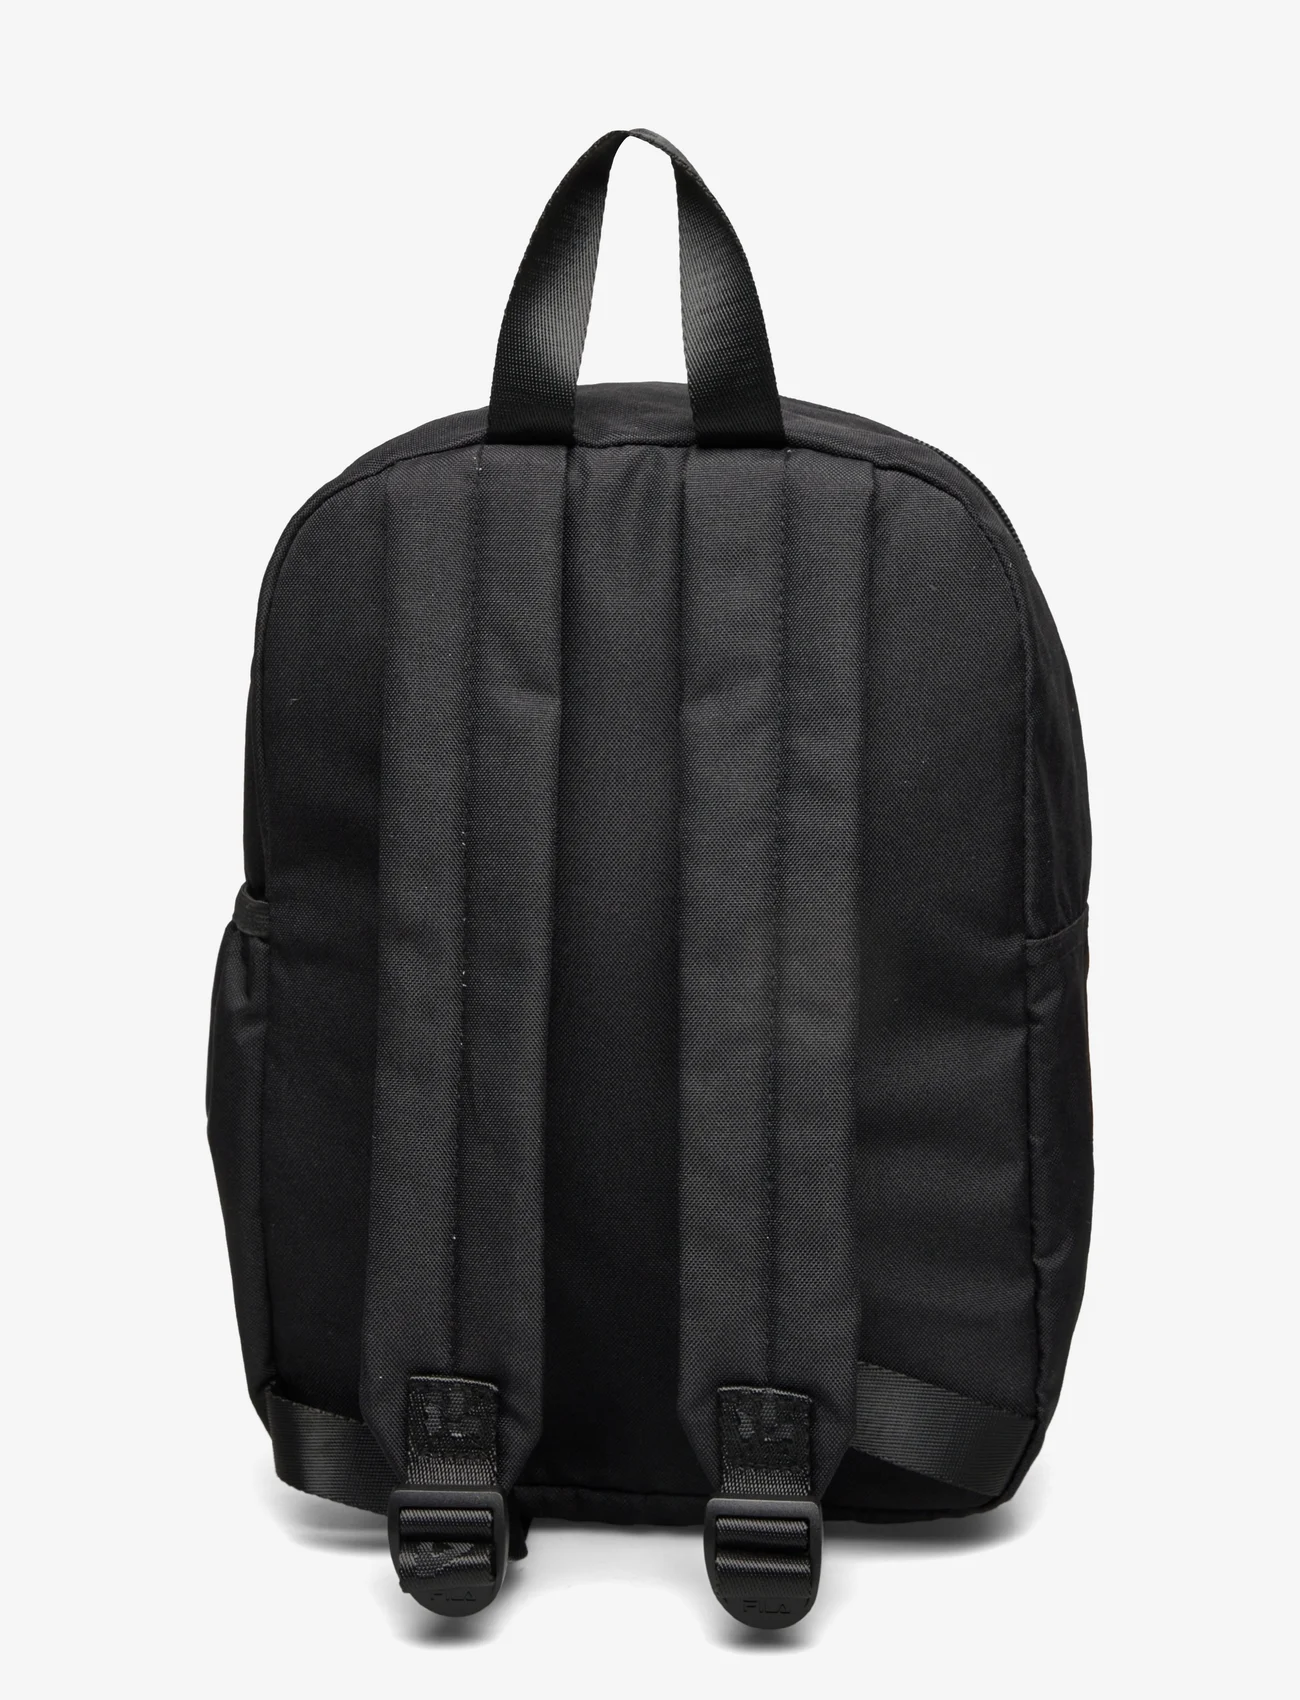 FILA - BURY Small easy backpack - zomerkoopjes - black - 1